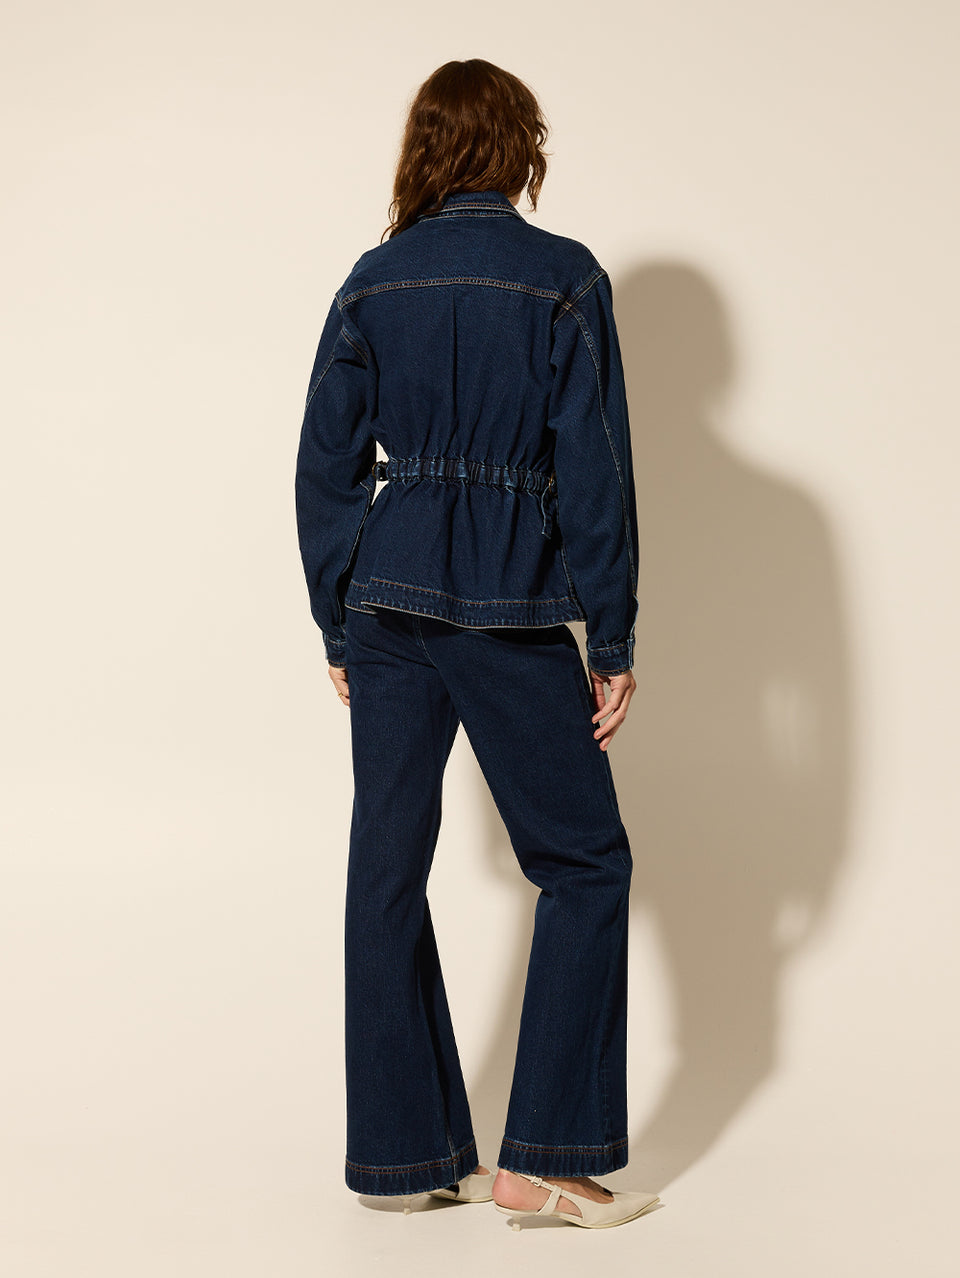 Dominique Jacket KIVARI | Model wears dark denim jacket back view